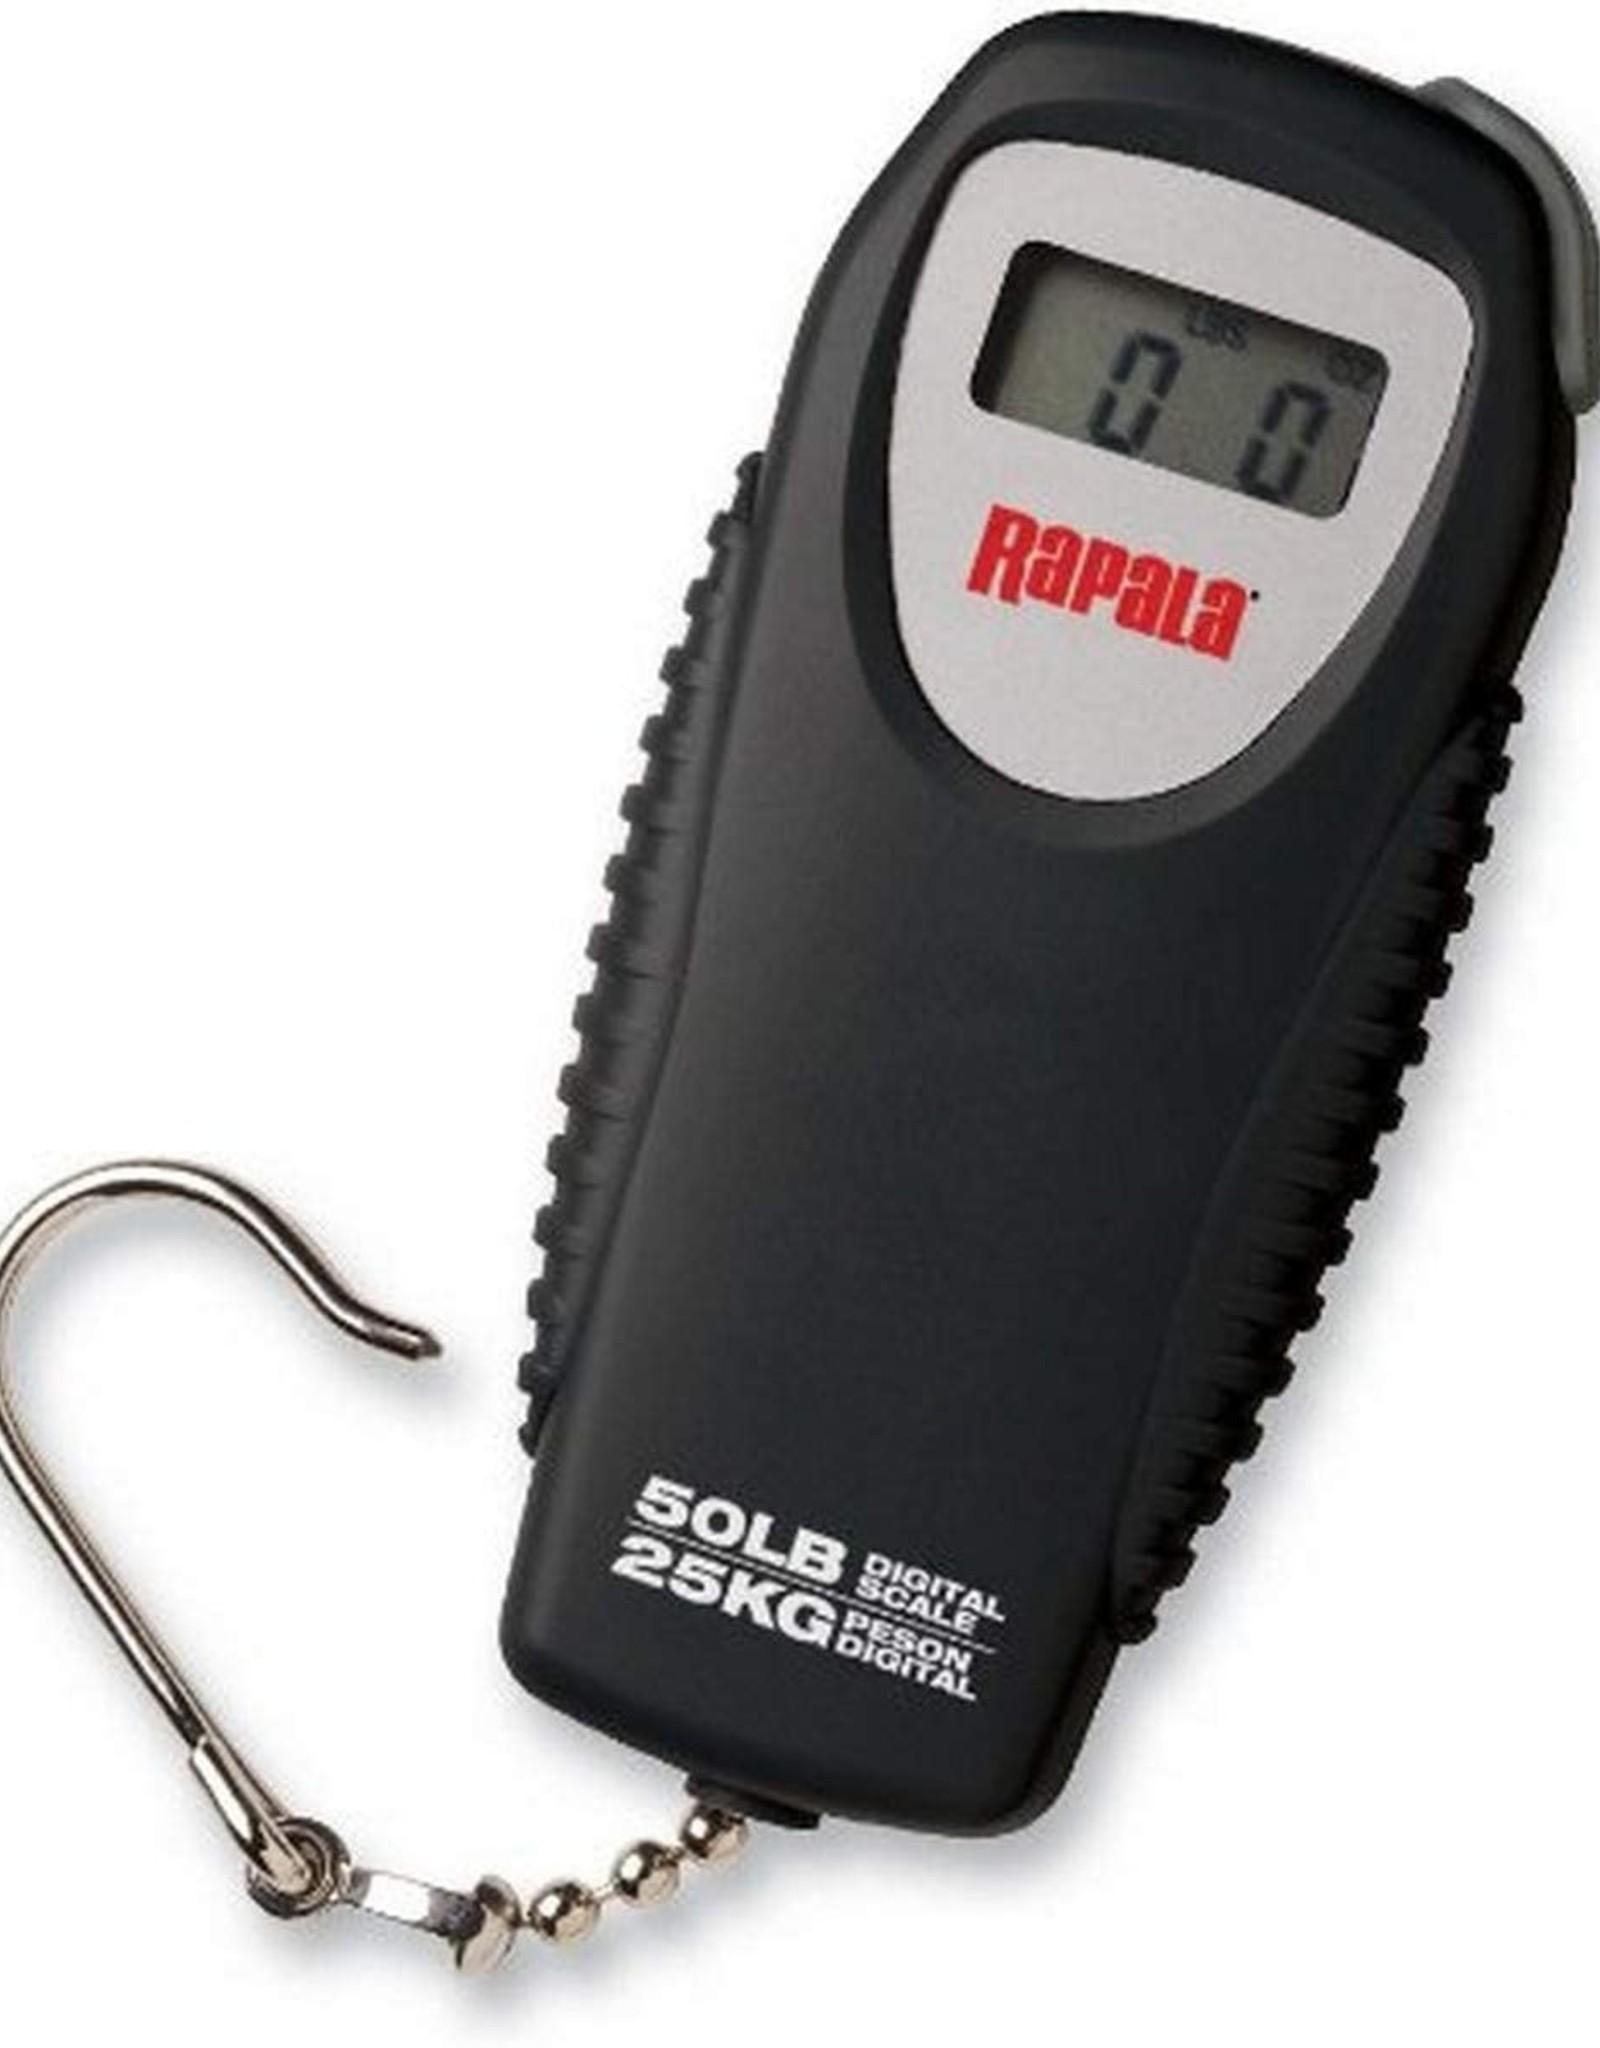 Rapala 50lb Digital Scale